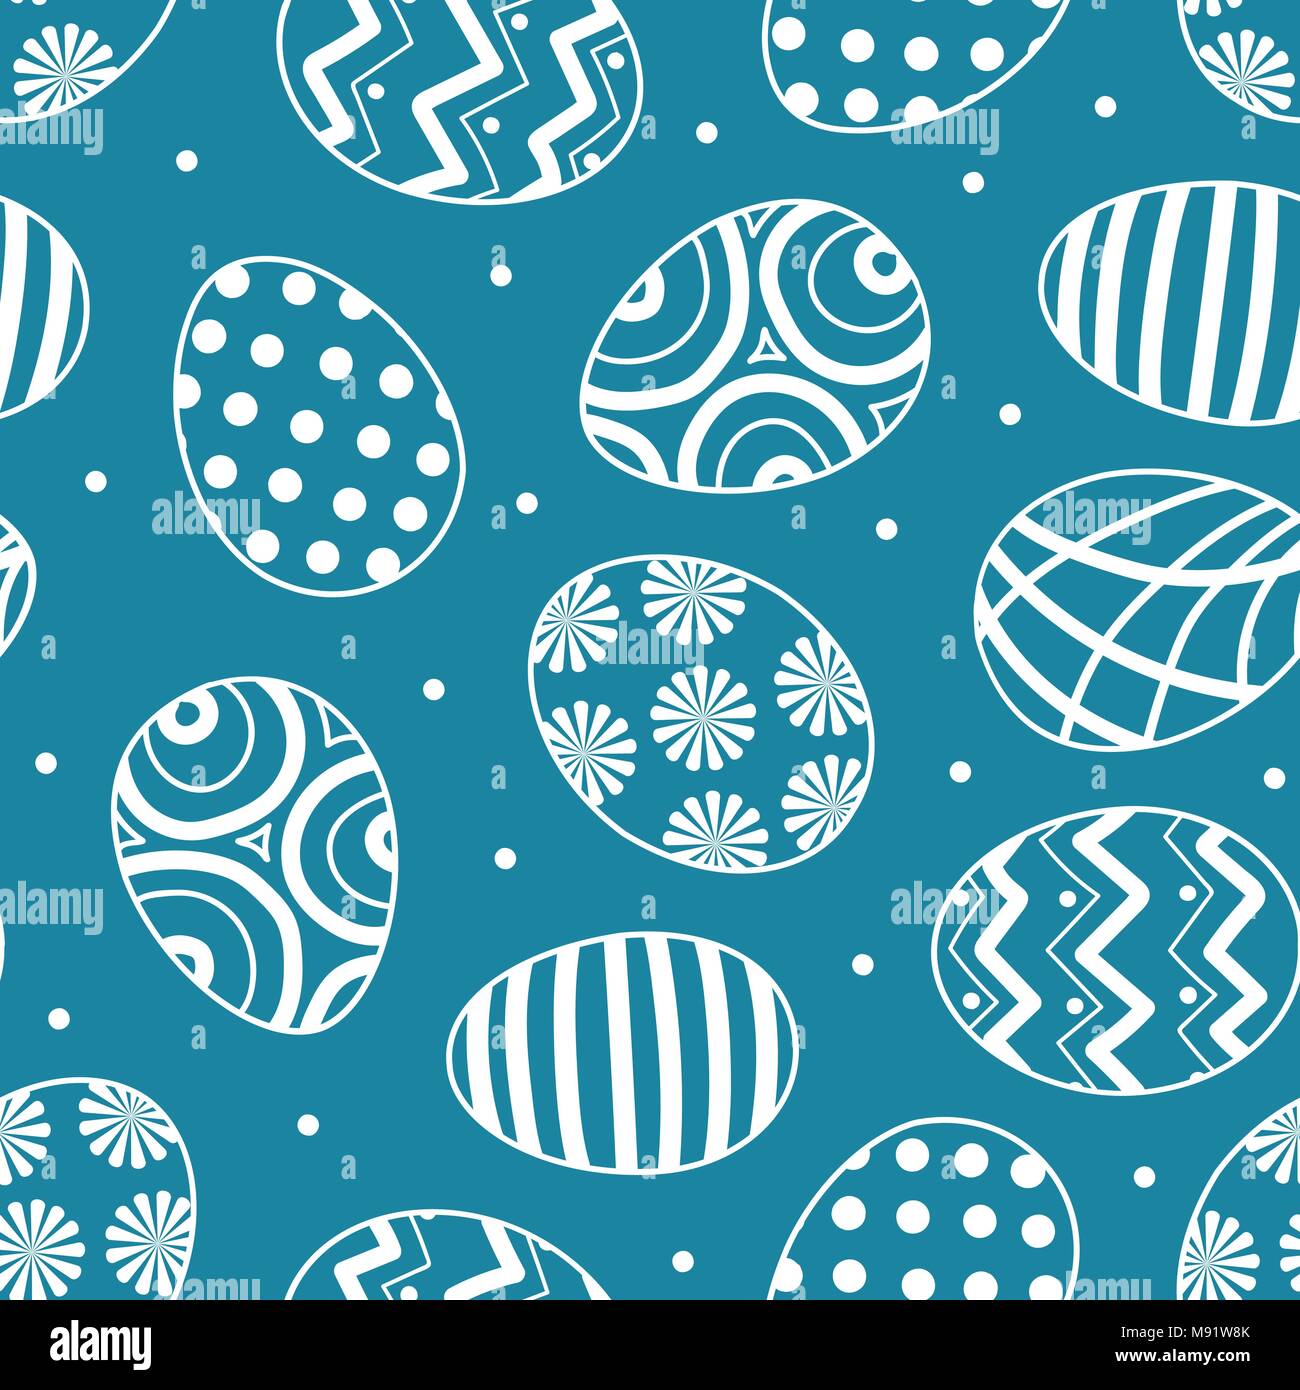 Easter eggs in white outline and white dots random on blue background. Cute hand drawn seamless pattern design for Easter festival in vector illustrat Stock Vector